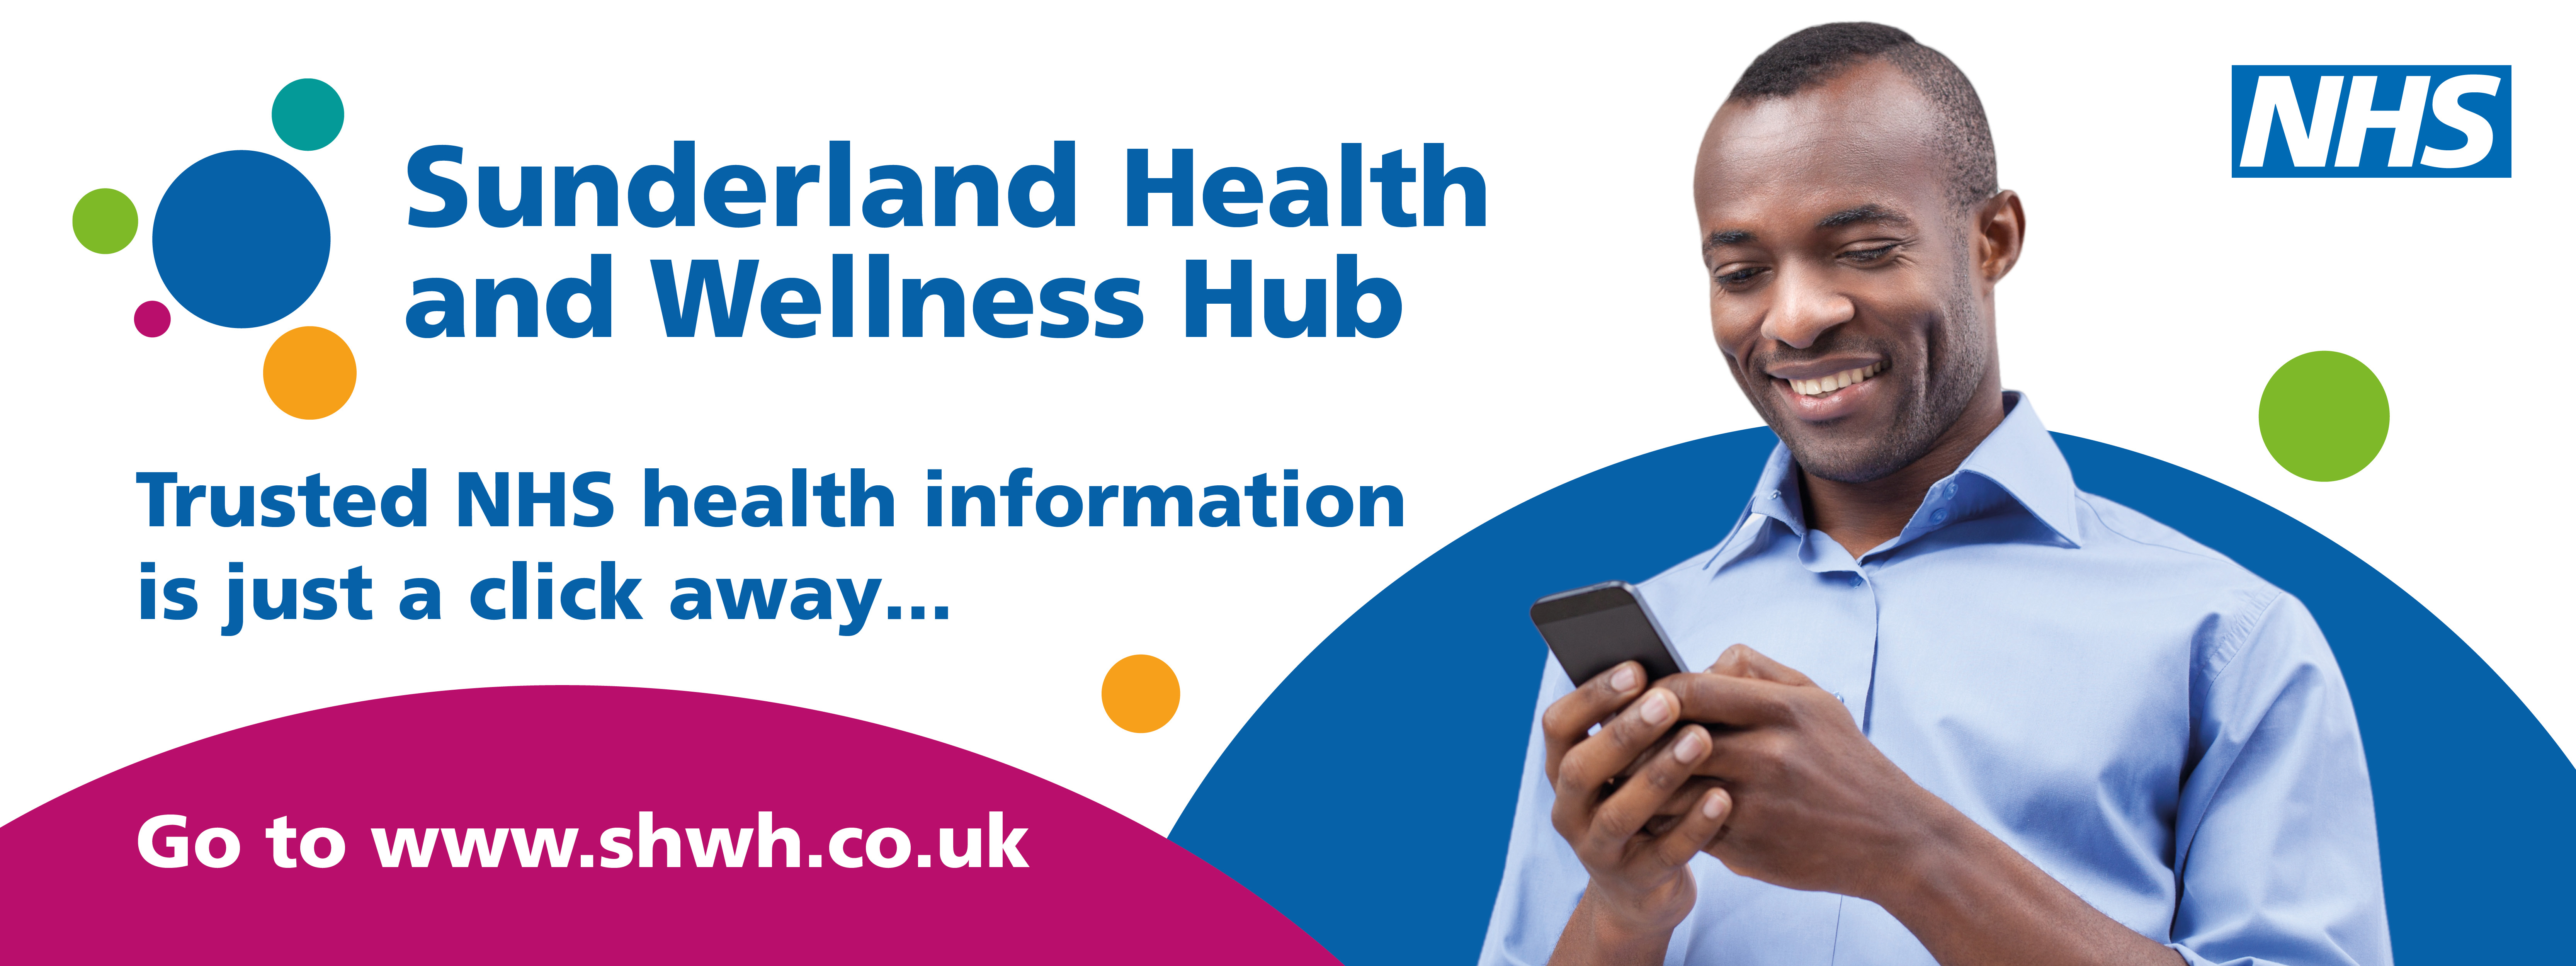 Sunderland Health and Wellness Hub